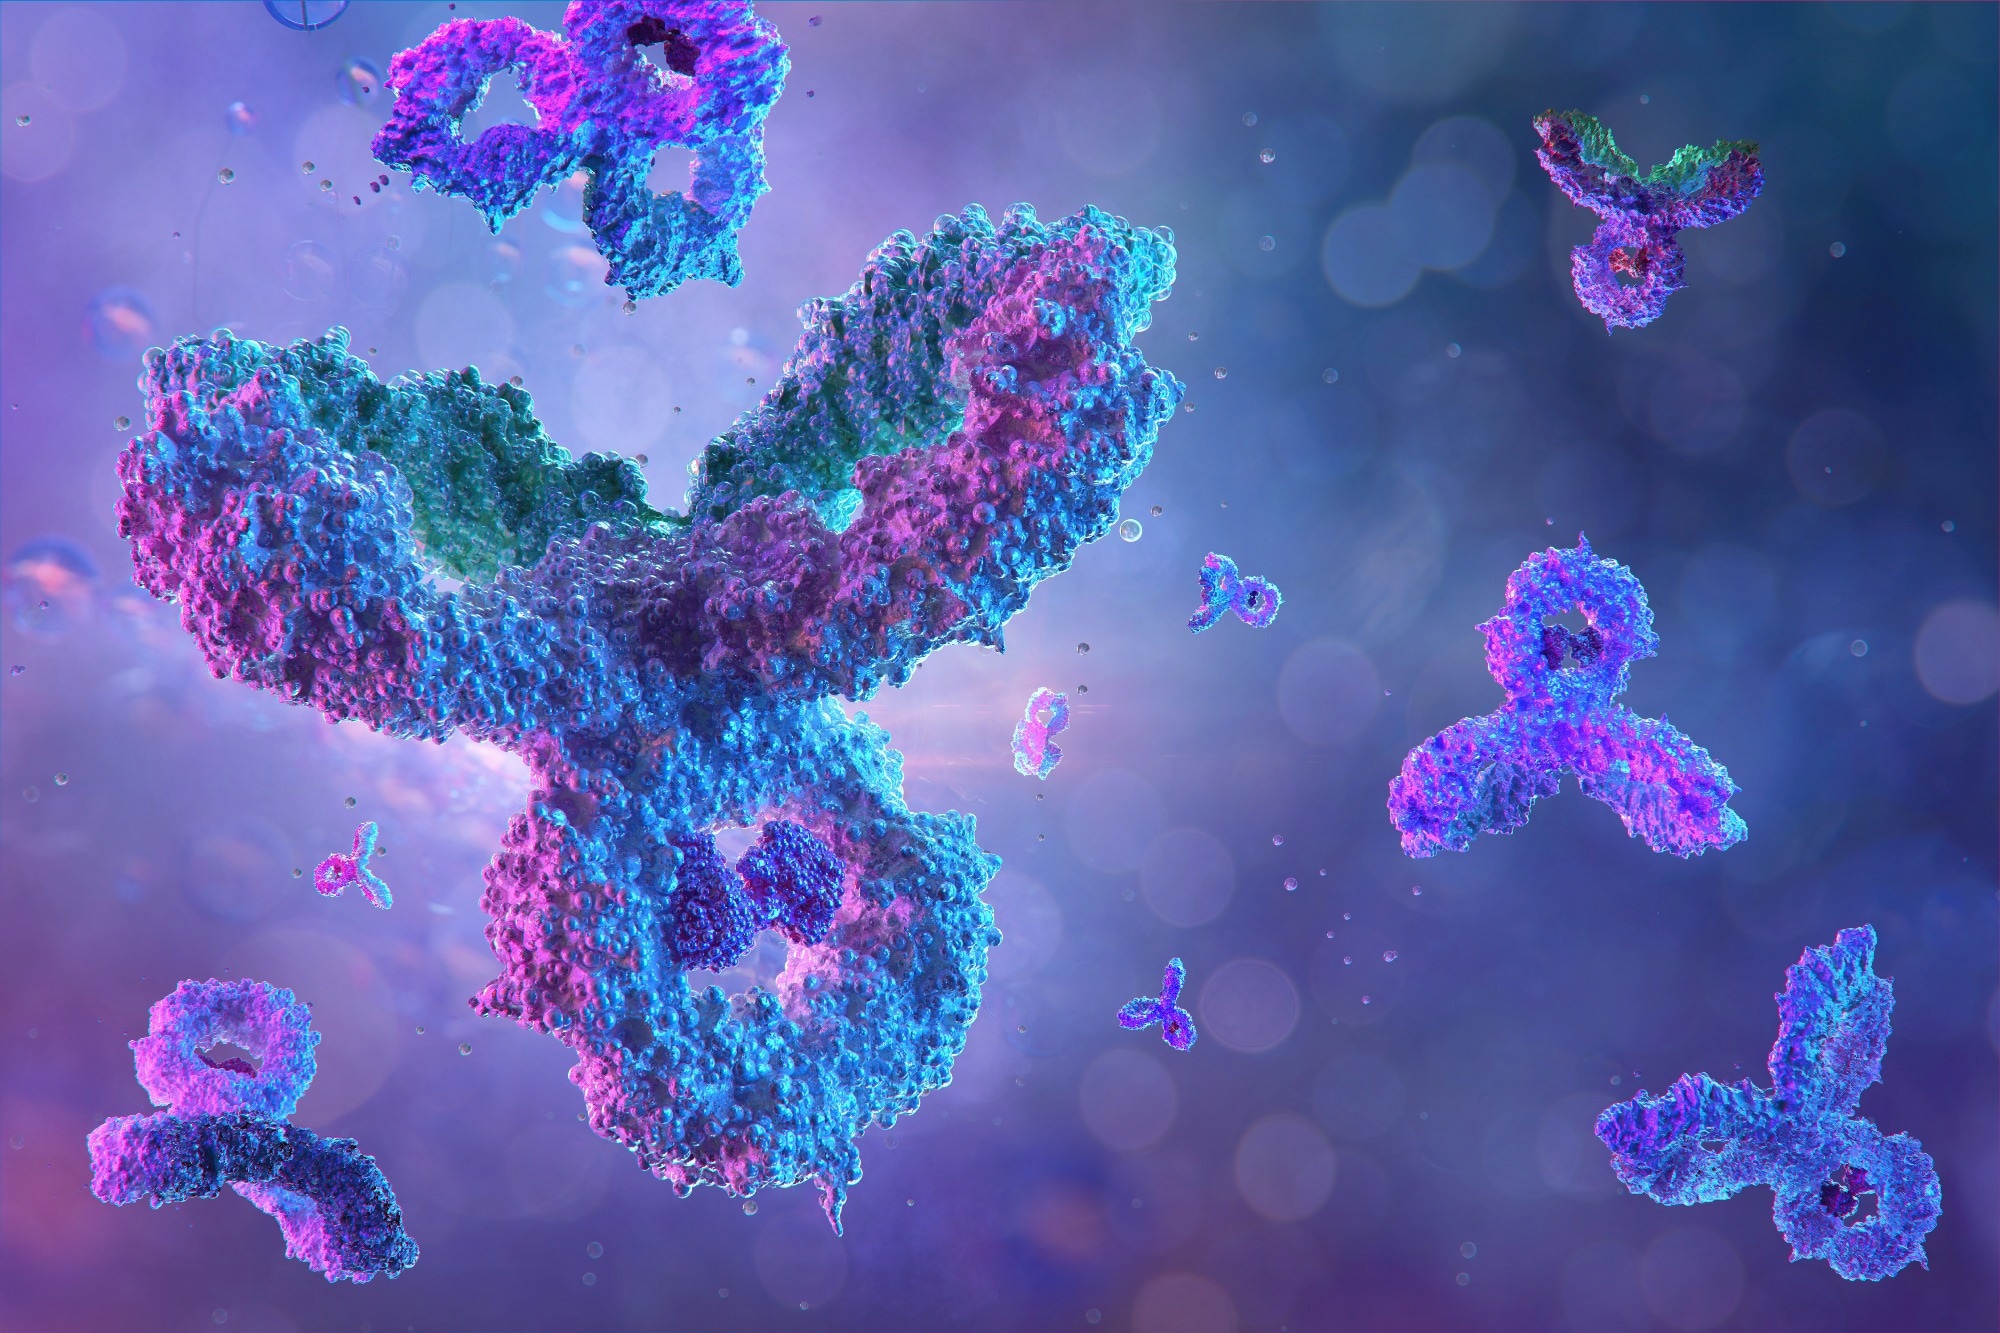 Study: The SARS-CoV-2 protein ORF3c is a mitochondrial modulator of innate immunity. Image Credit: Corona Borealis Studio/Shutterstock